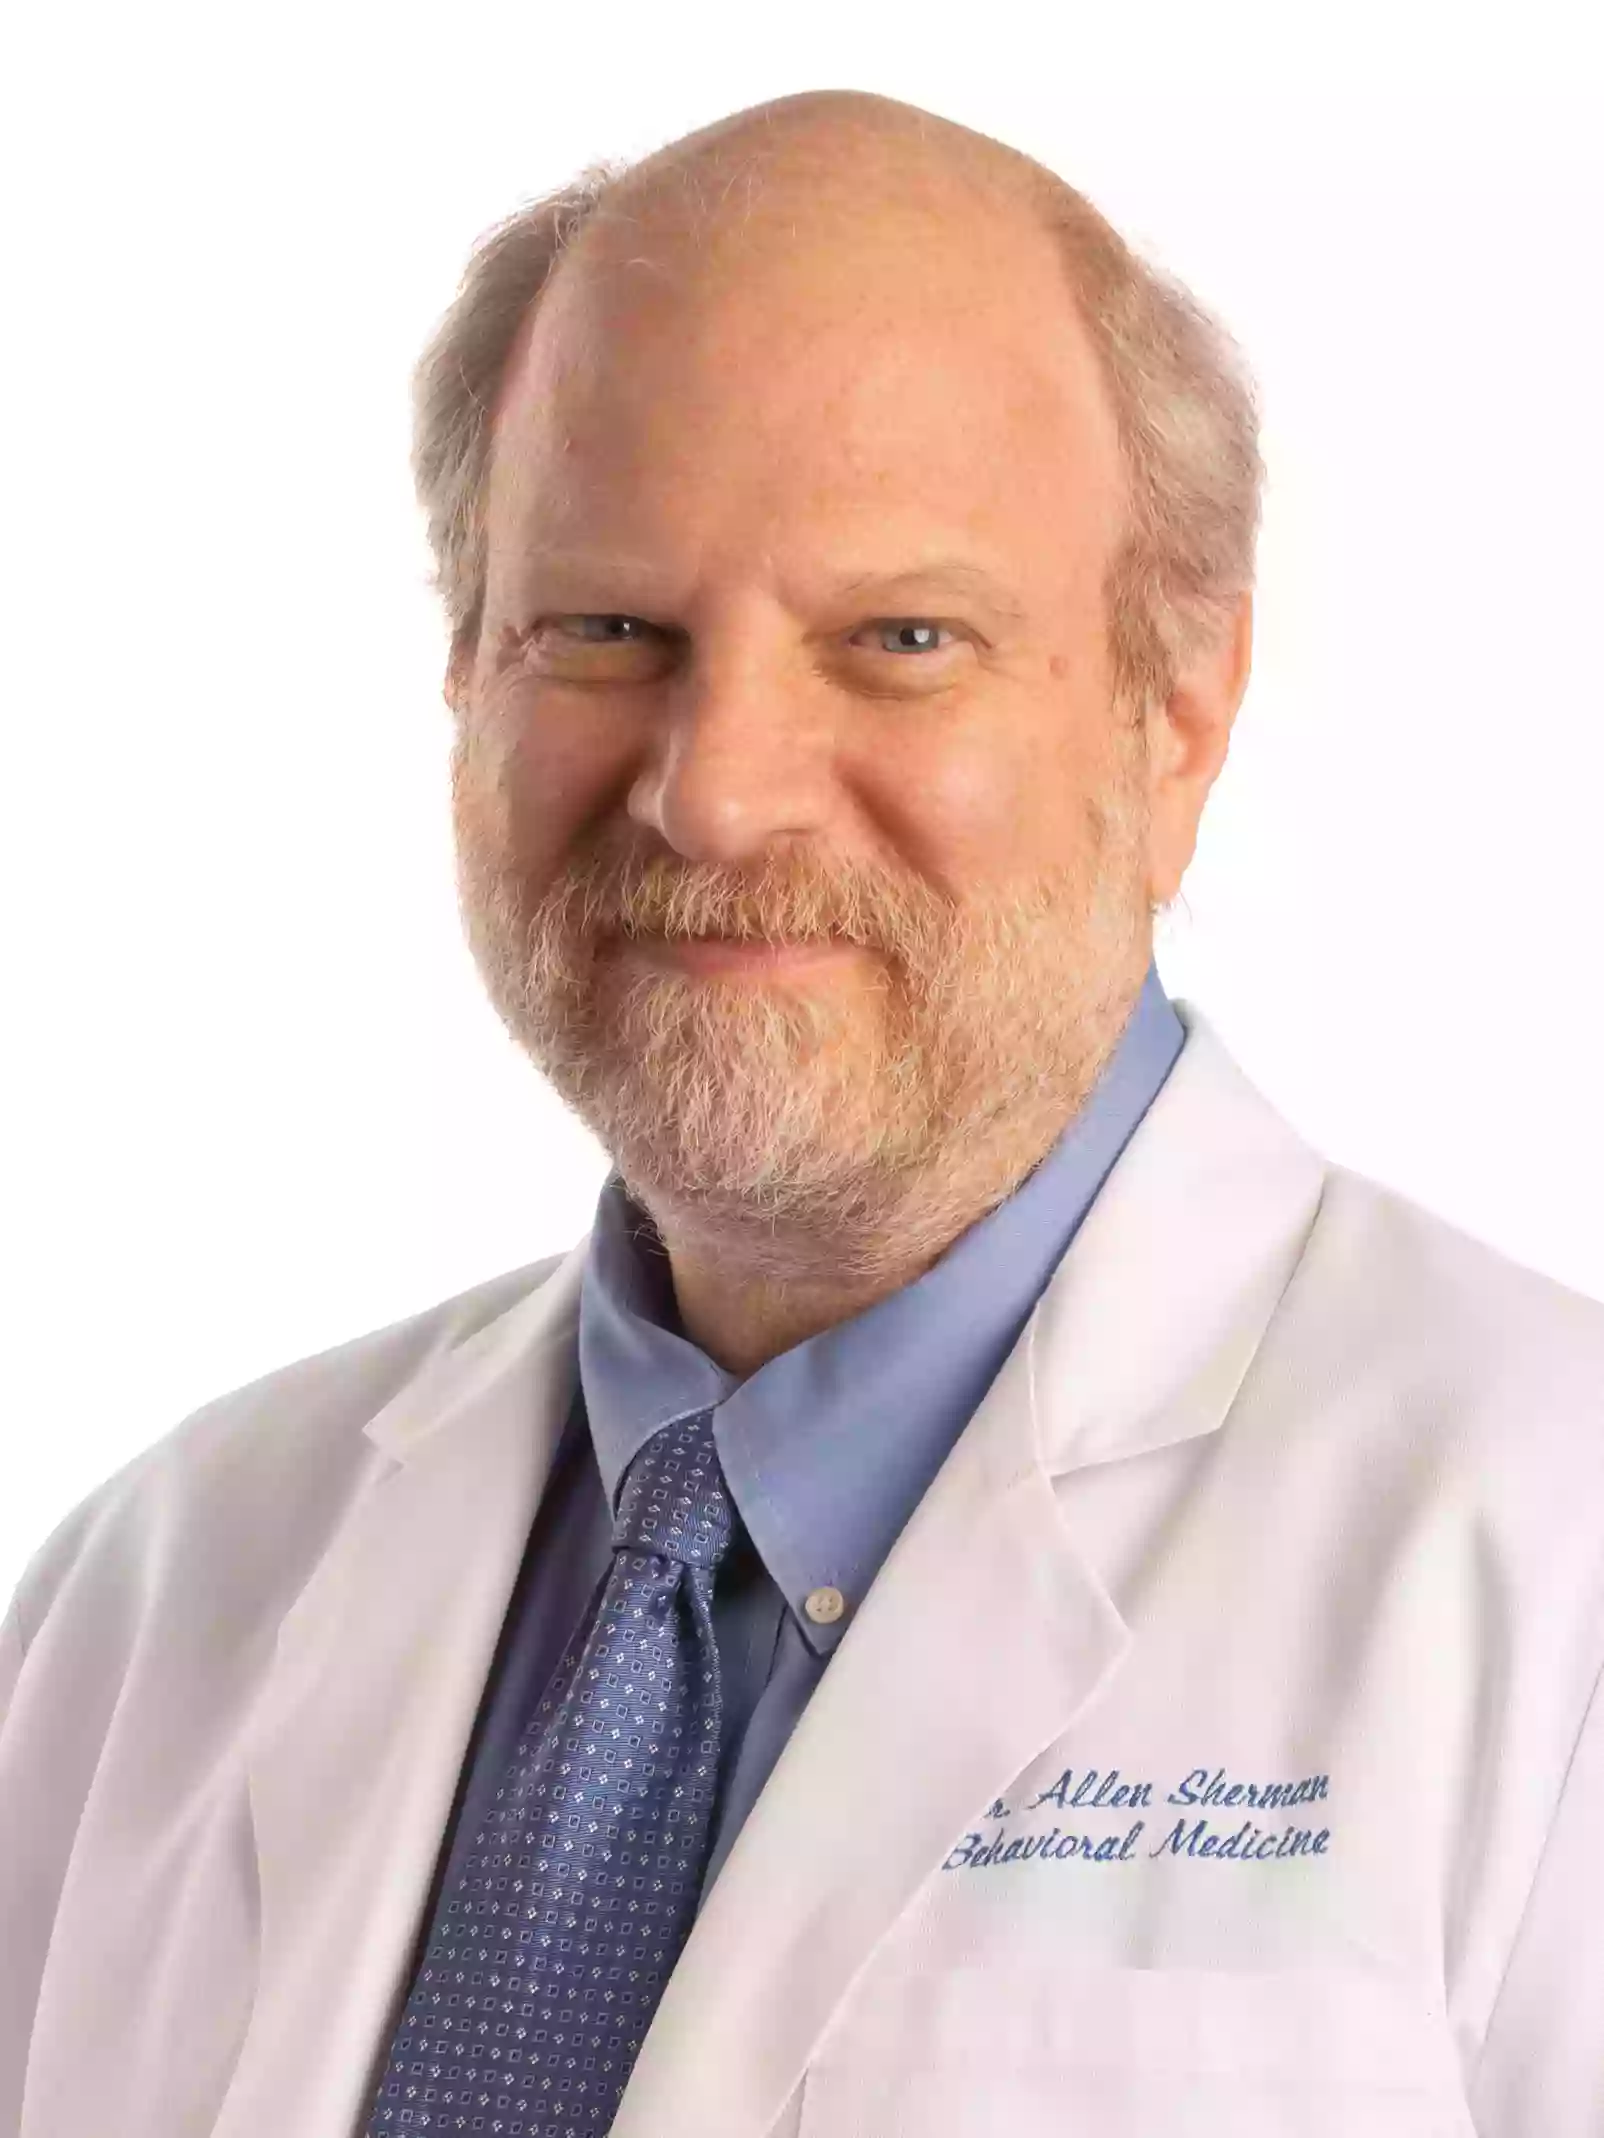 UAMS Health - Allen C. Sherman, Ph.D.